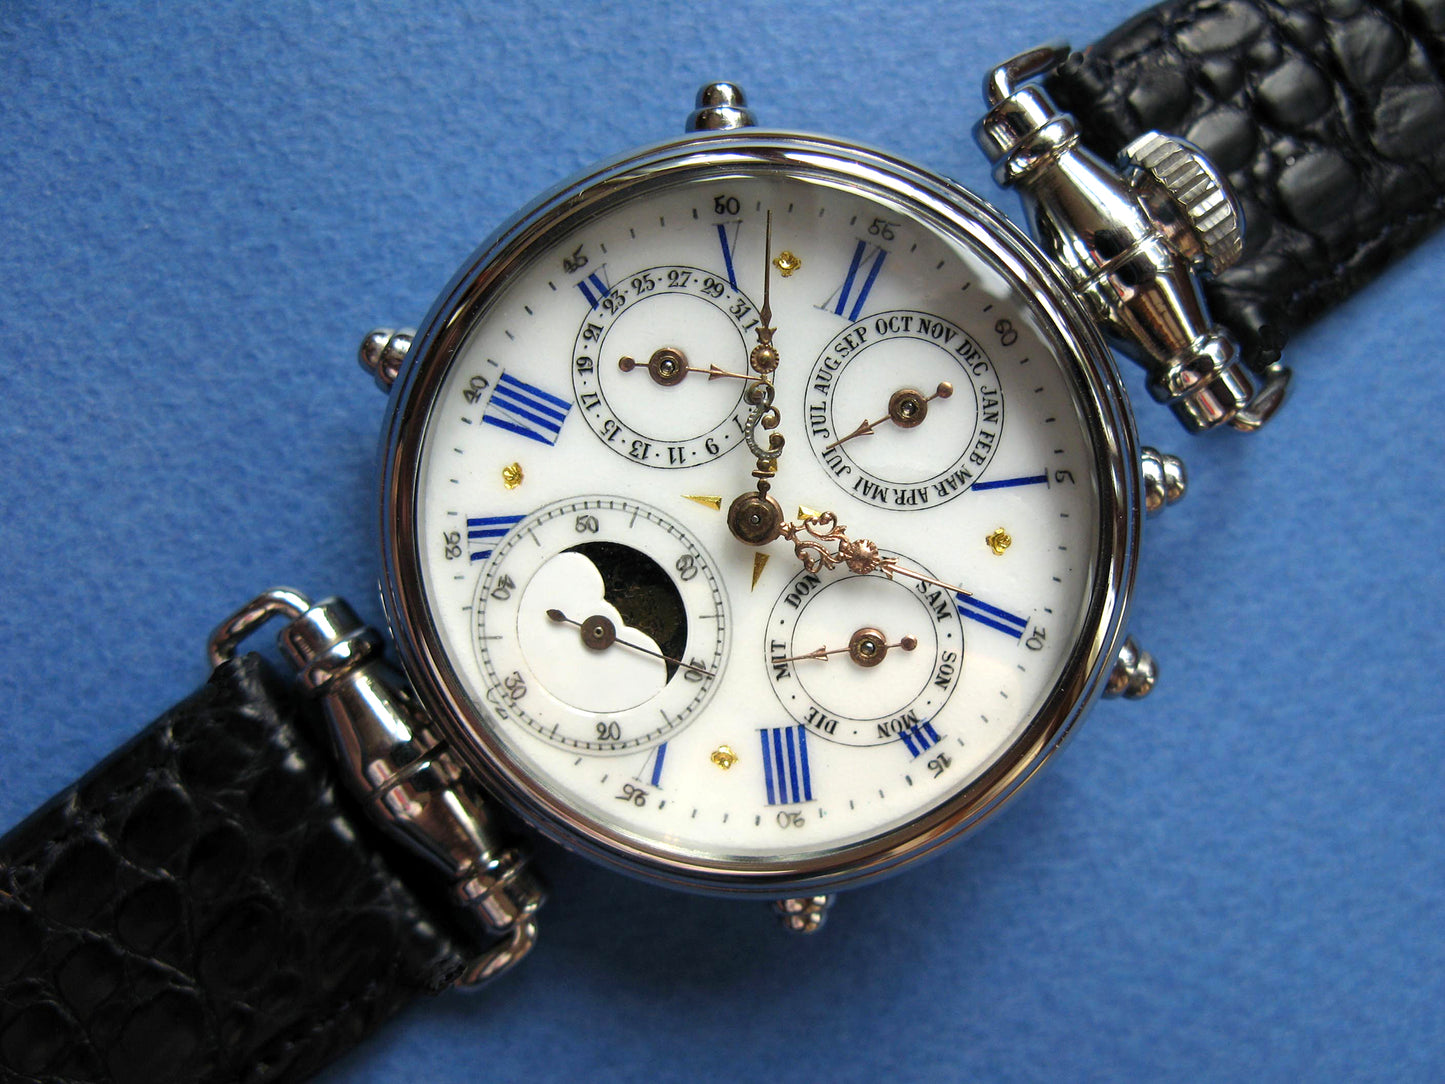 Antique Vacheron Constantin Perpetual Moon Phase exquisite watch.